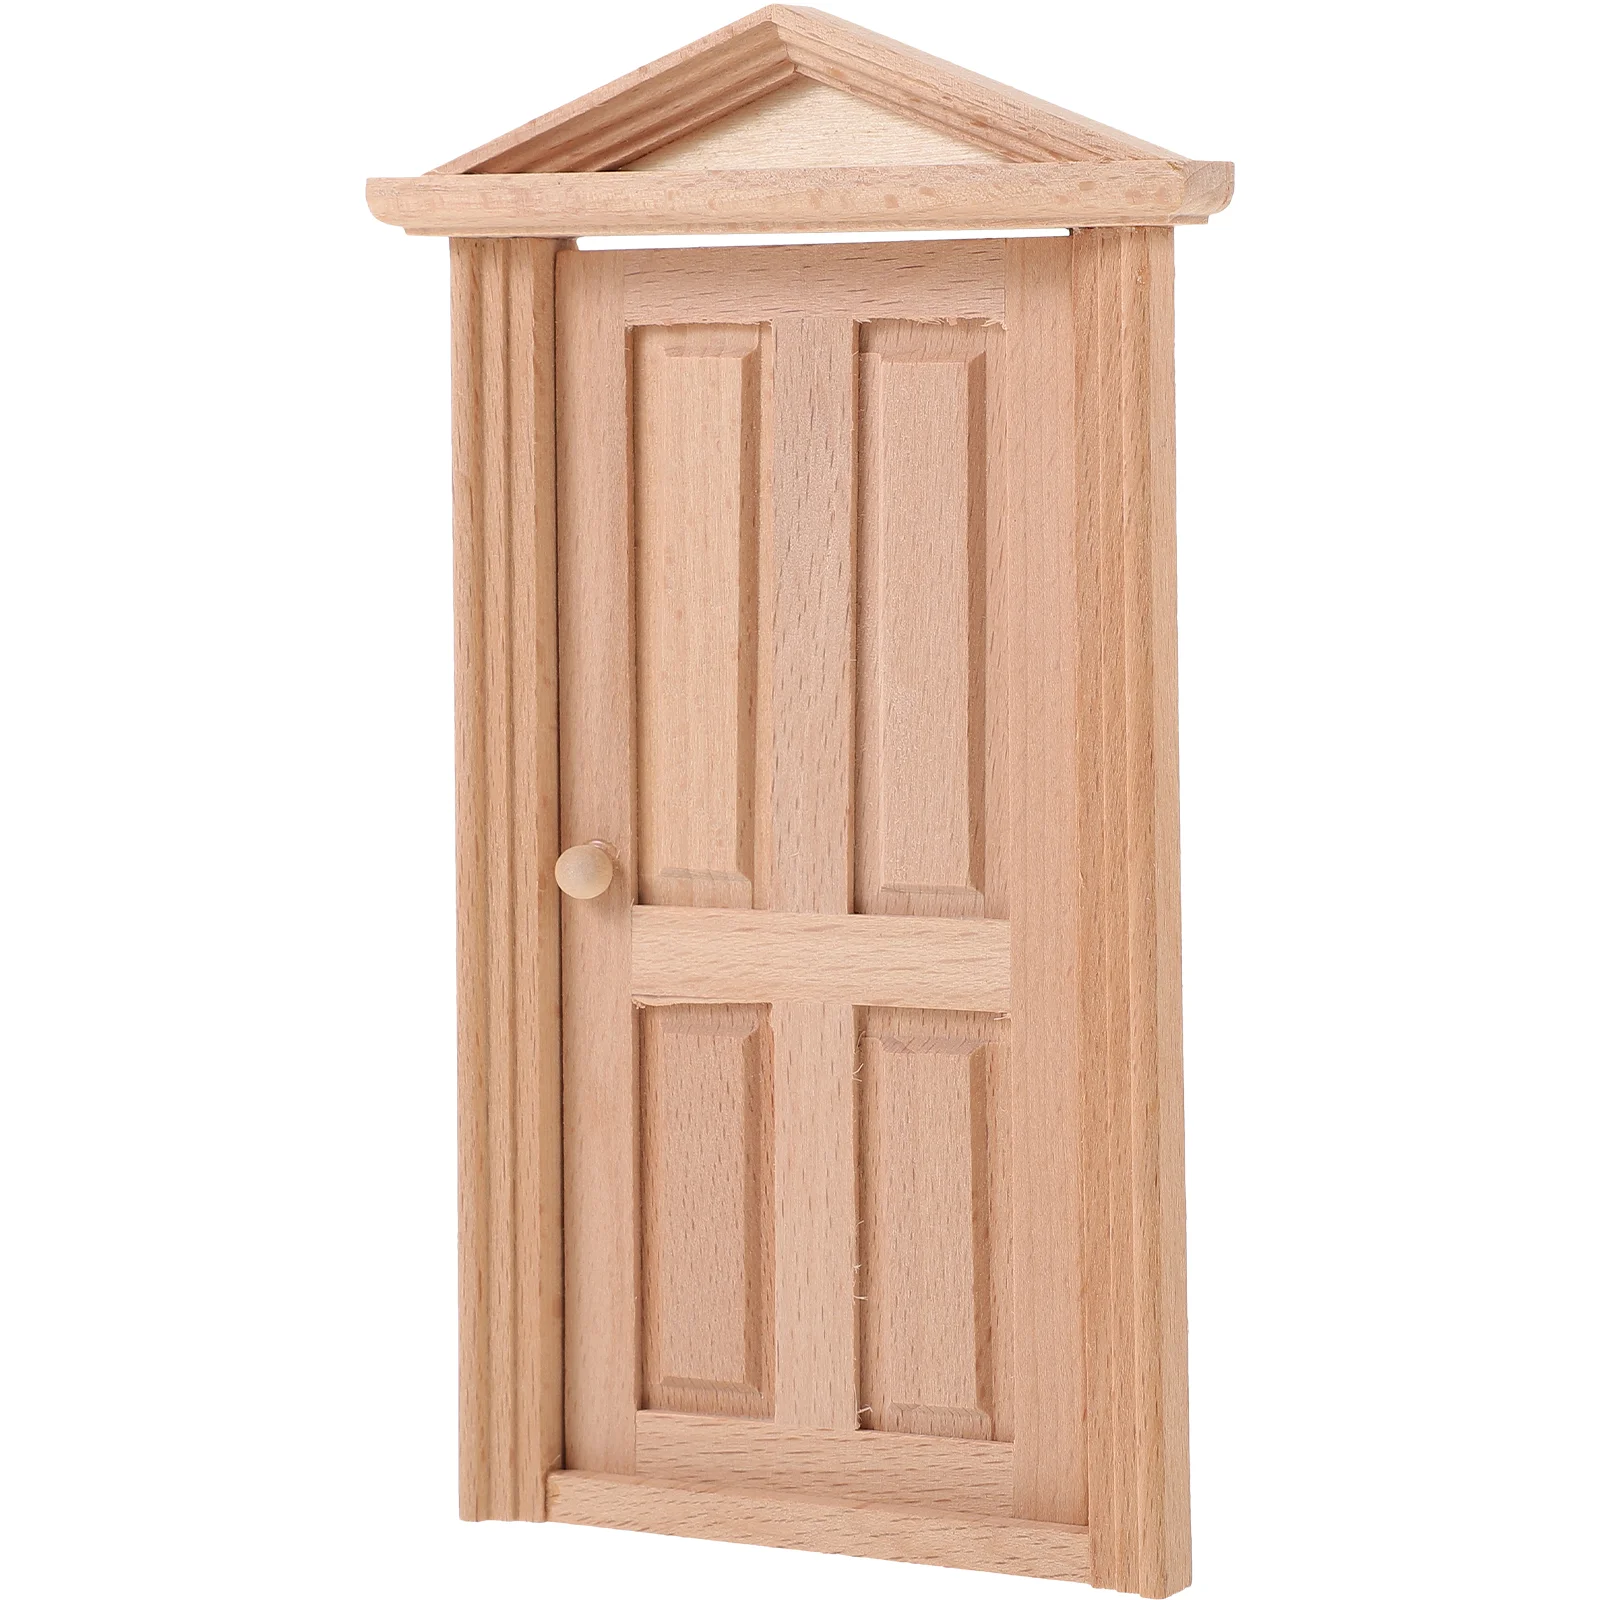 

Home Accessories Mini House Decor Door Dolls Unpainted Wooden Doors Furniture Miniature Gate Model